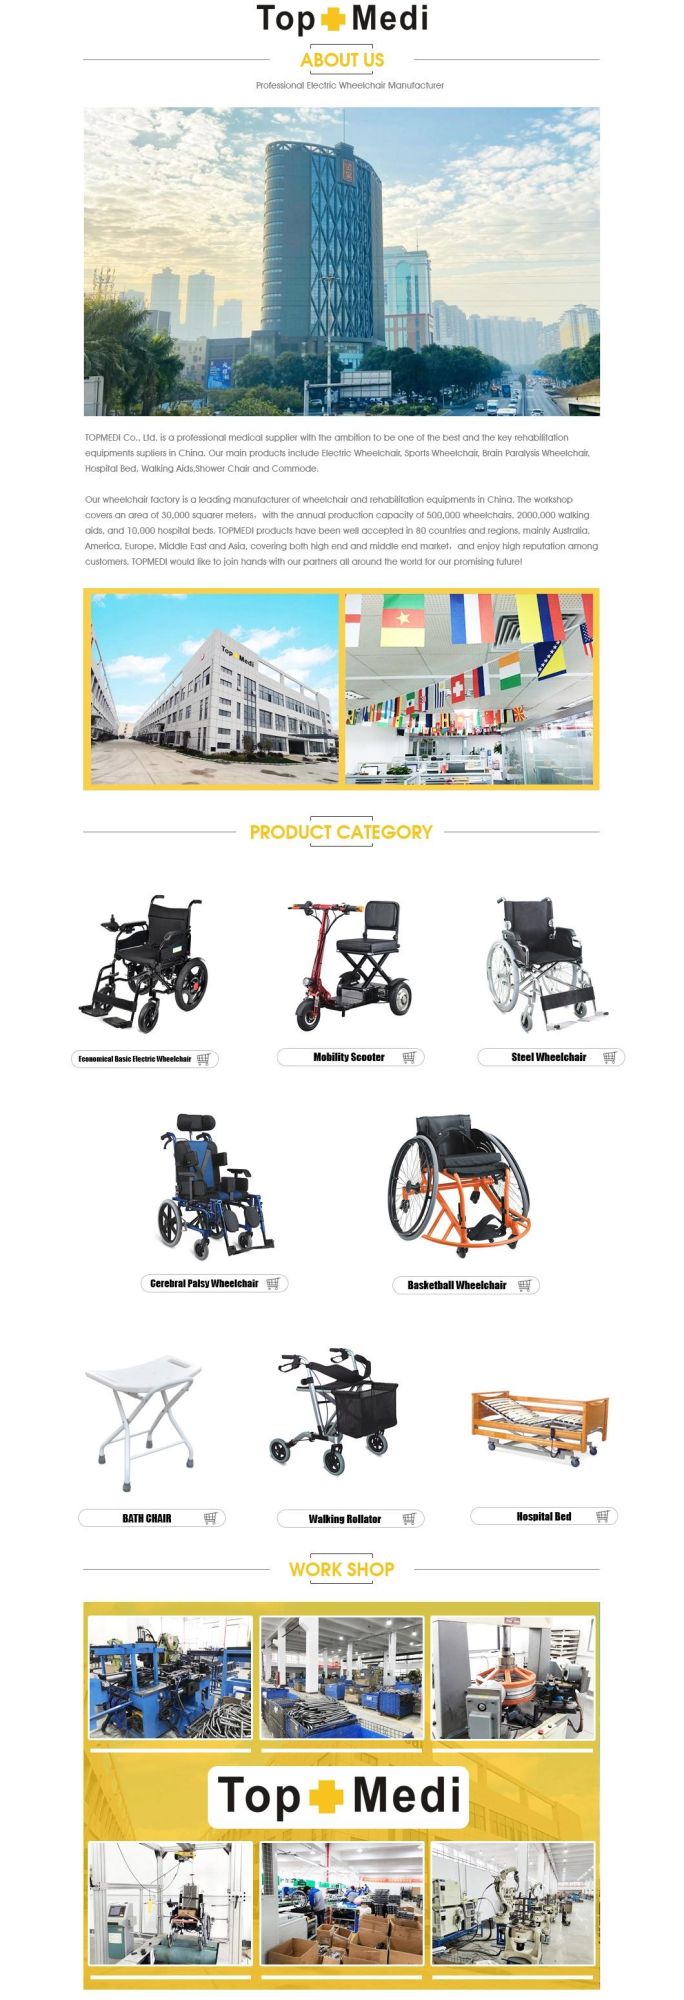 Portable Rolling Walkers 4 Wheels Walking Walker Rollator for Elderly and Disabled People